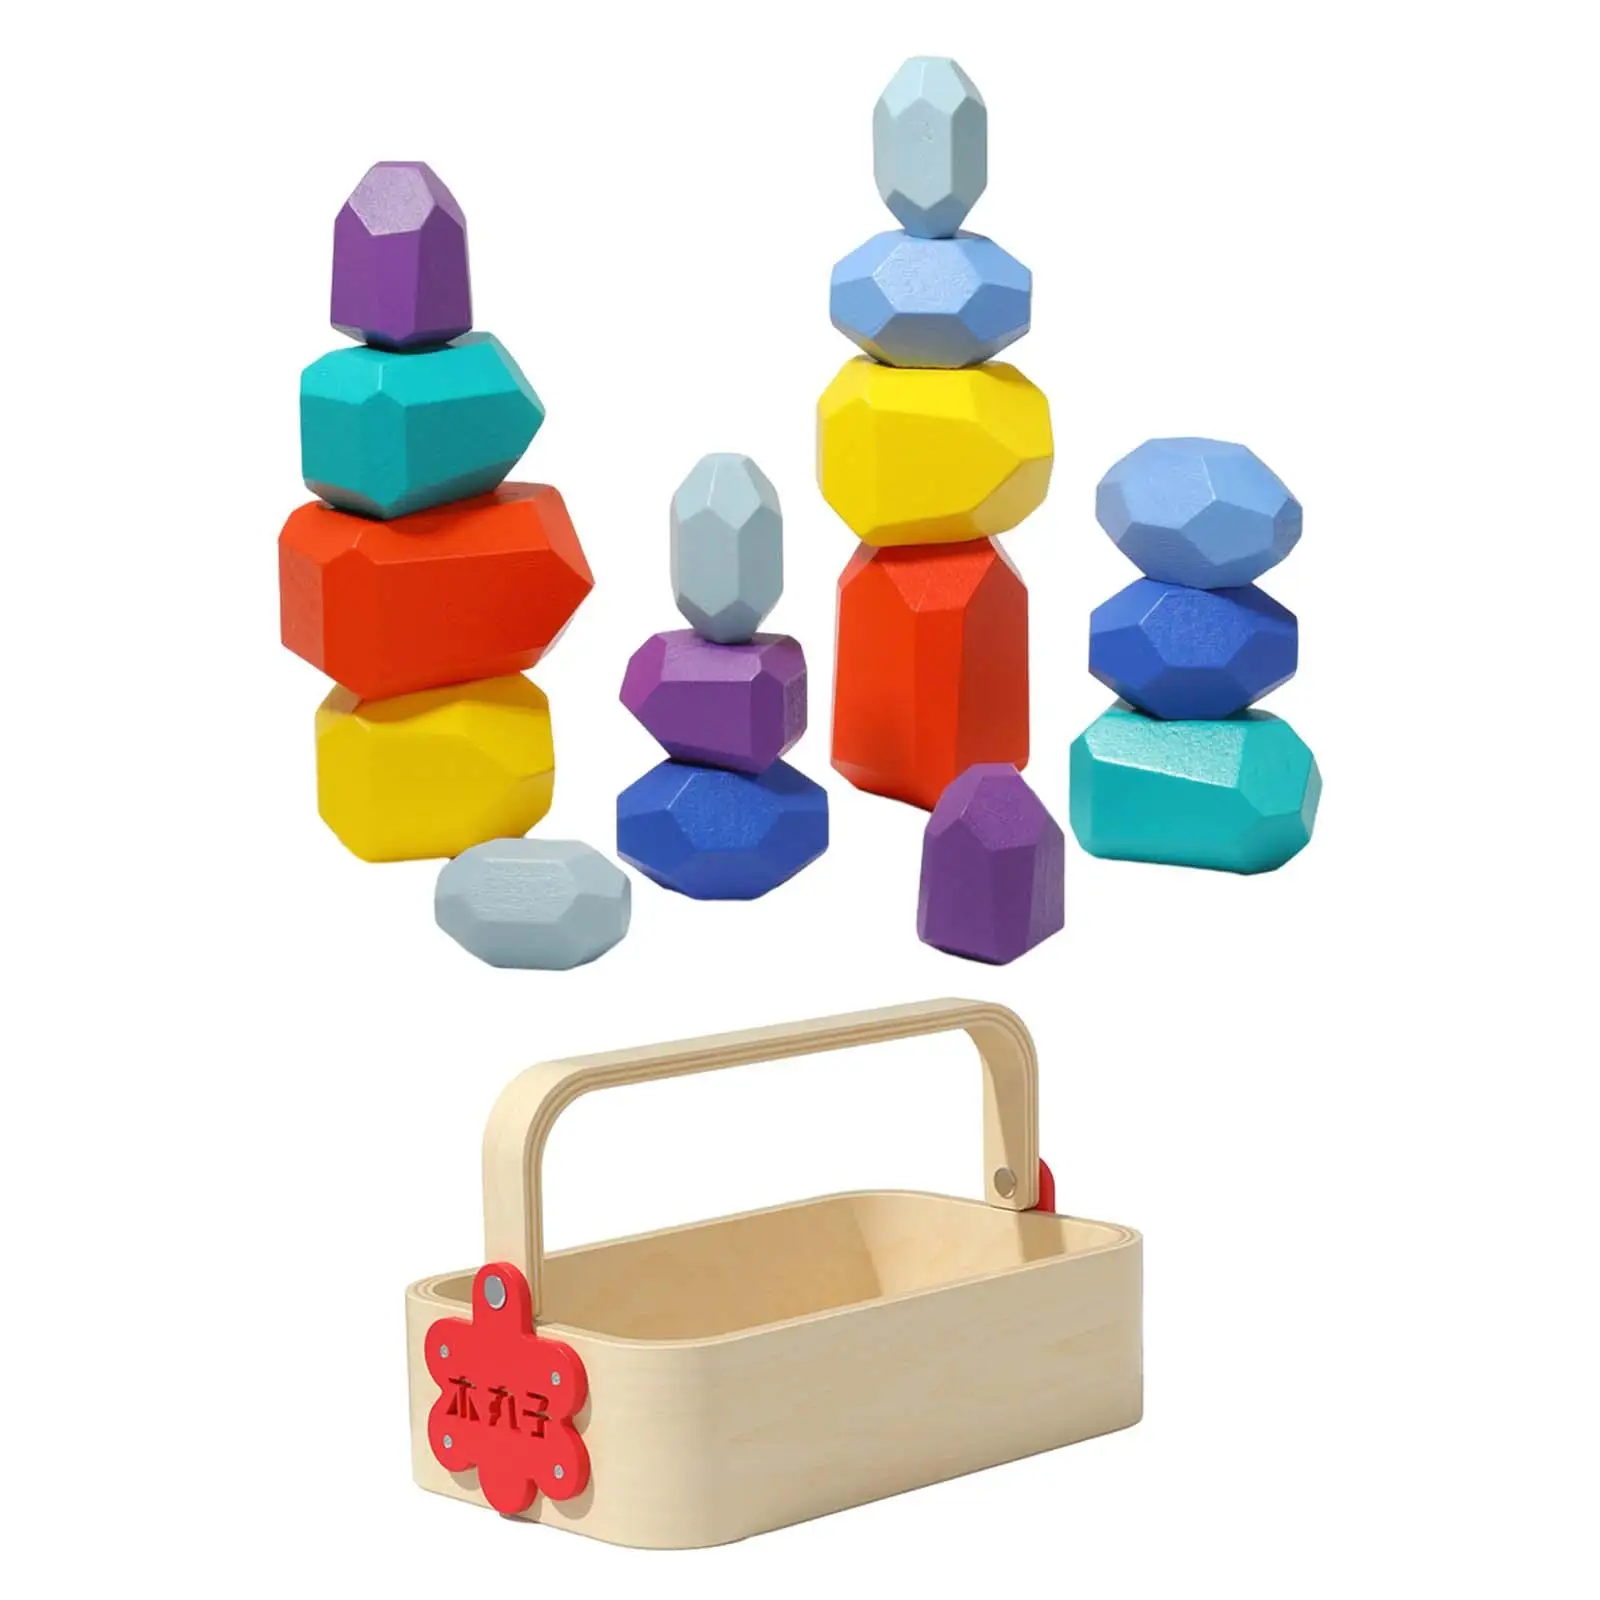 Balancing Stacking Stones Rocks Motor Skills Sorting Stacking Games Montessori for Kid 3 Years up Boys Children Holiday Gifts